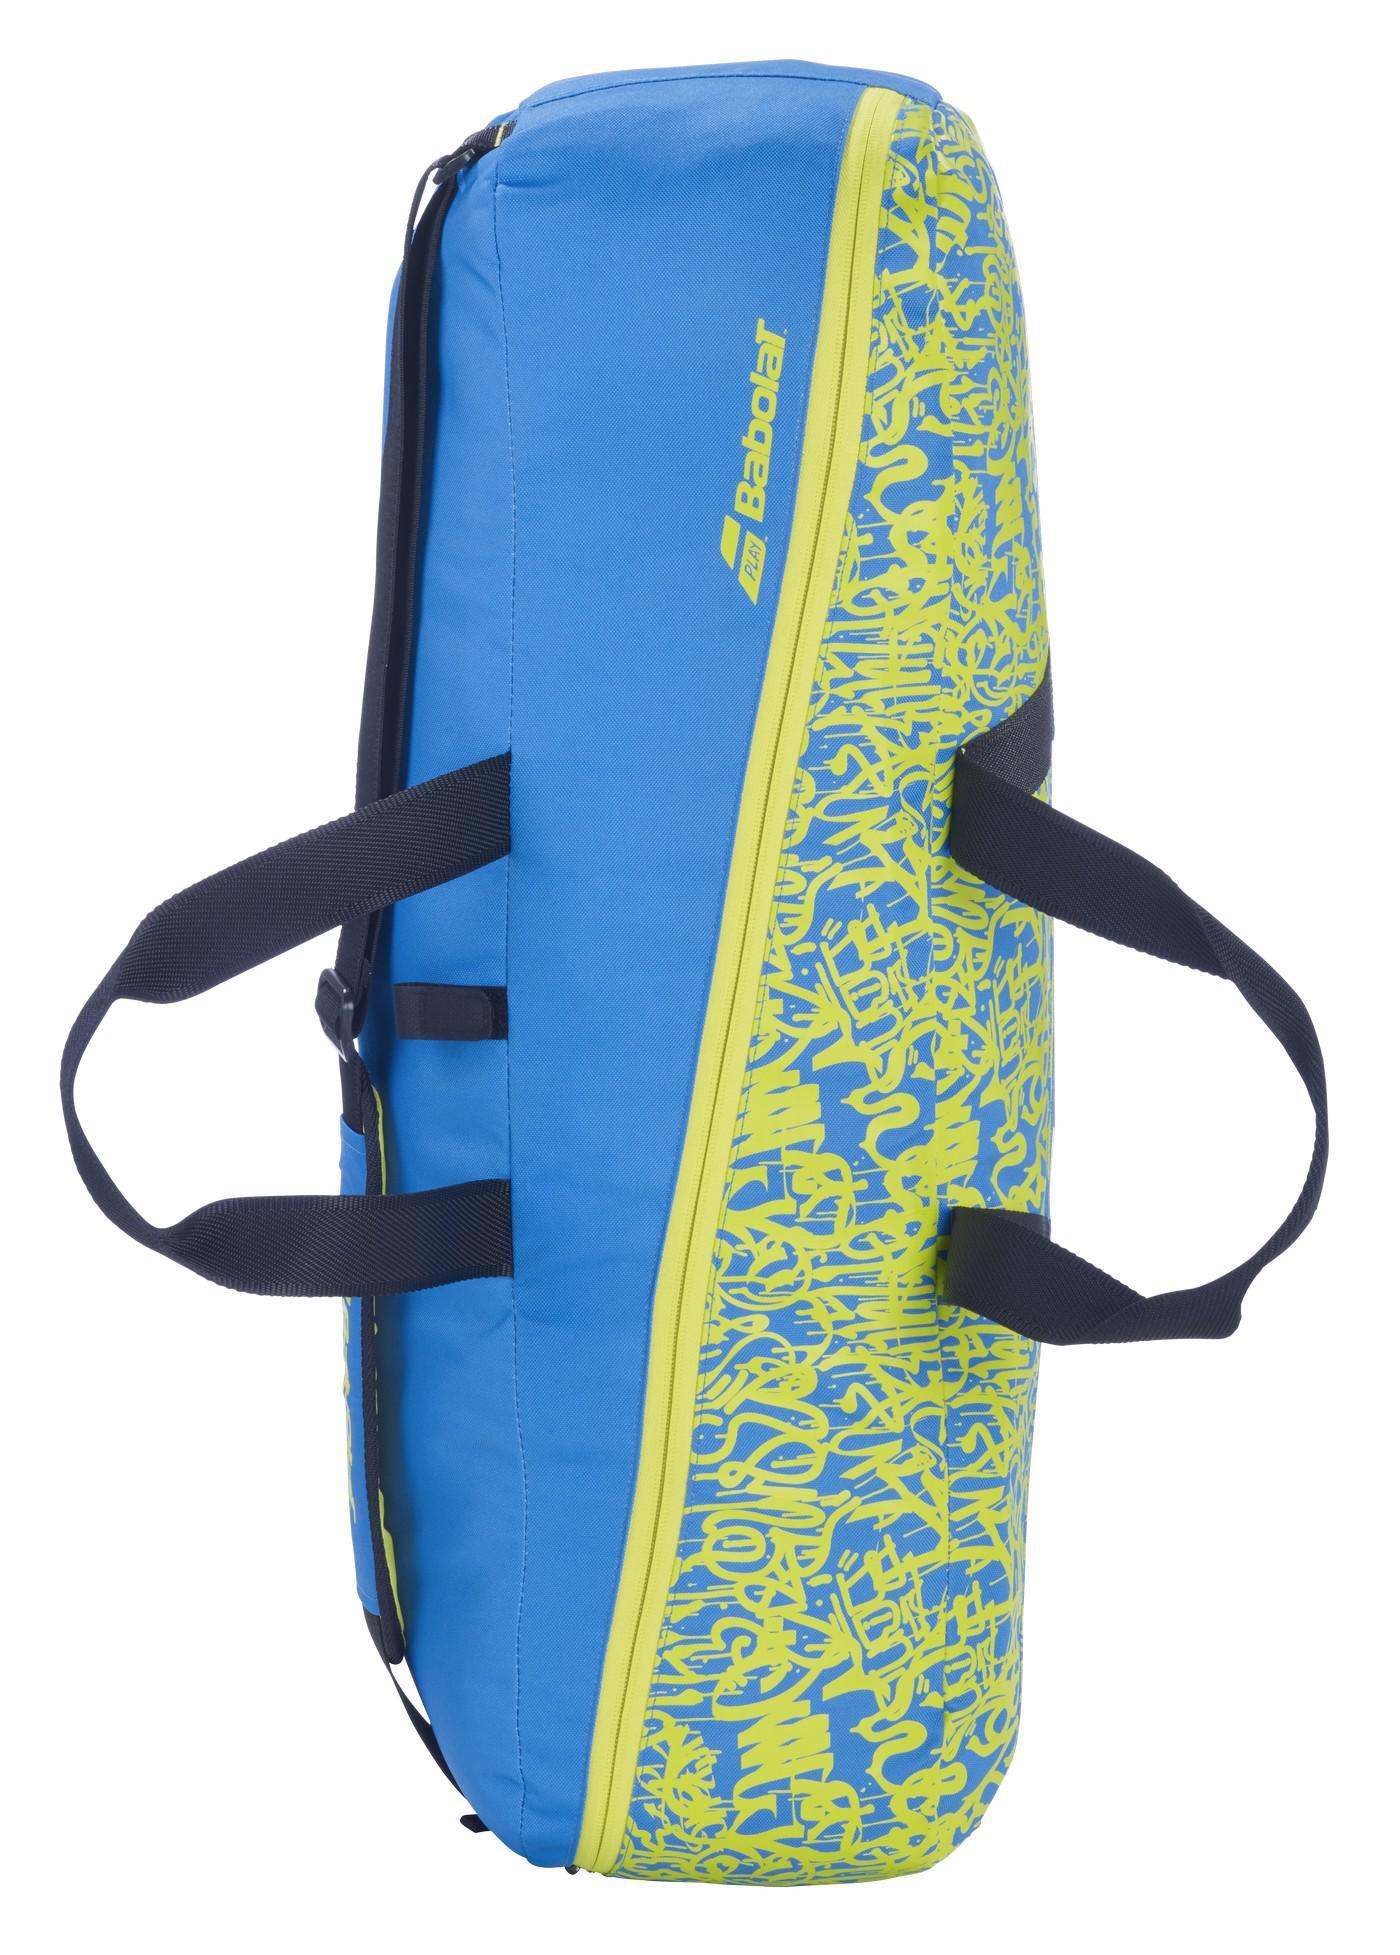 Babolat Tennis Duffle Bag - Blue/Yellow 4/5